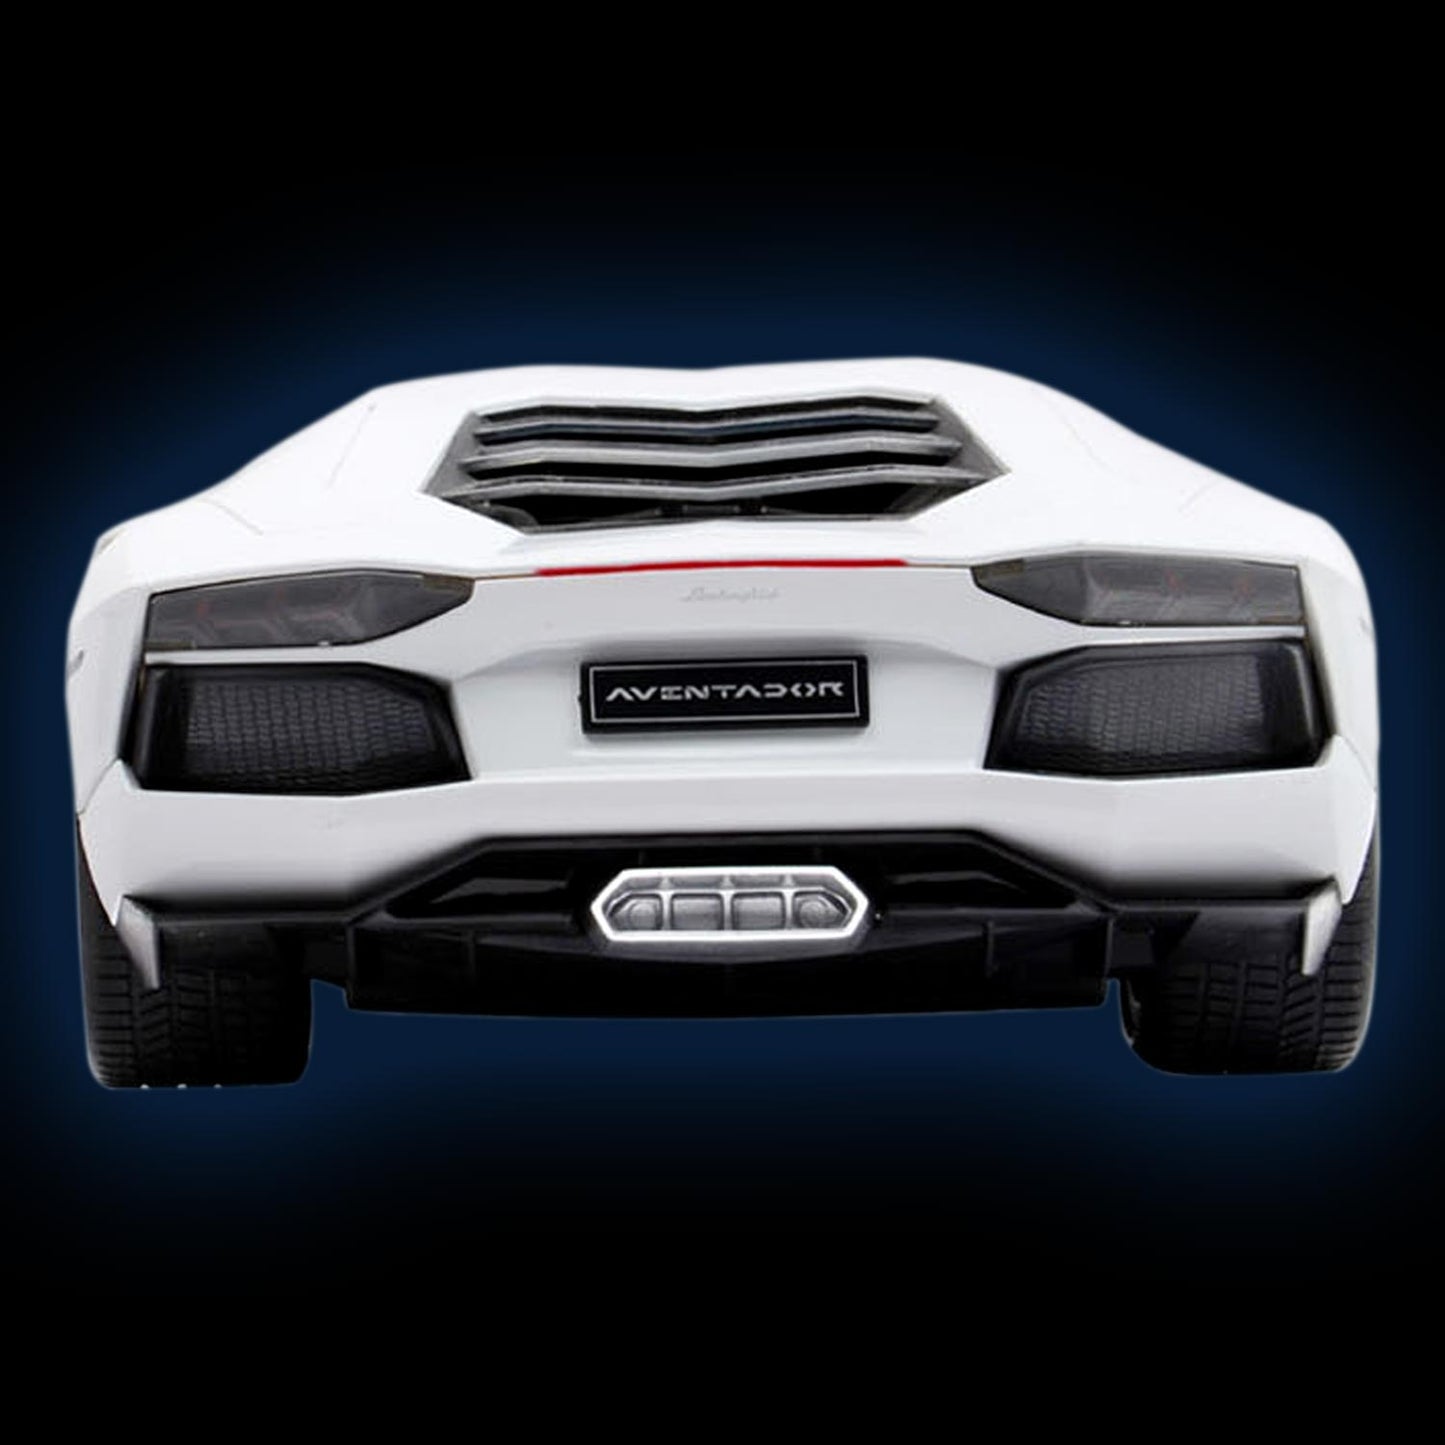 Lamborghini Aventador~White